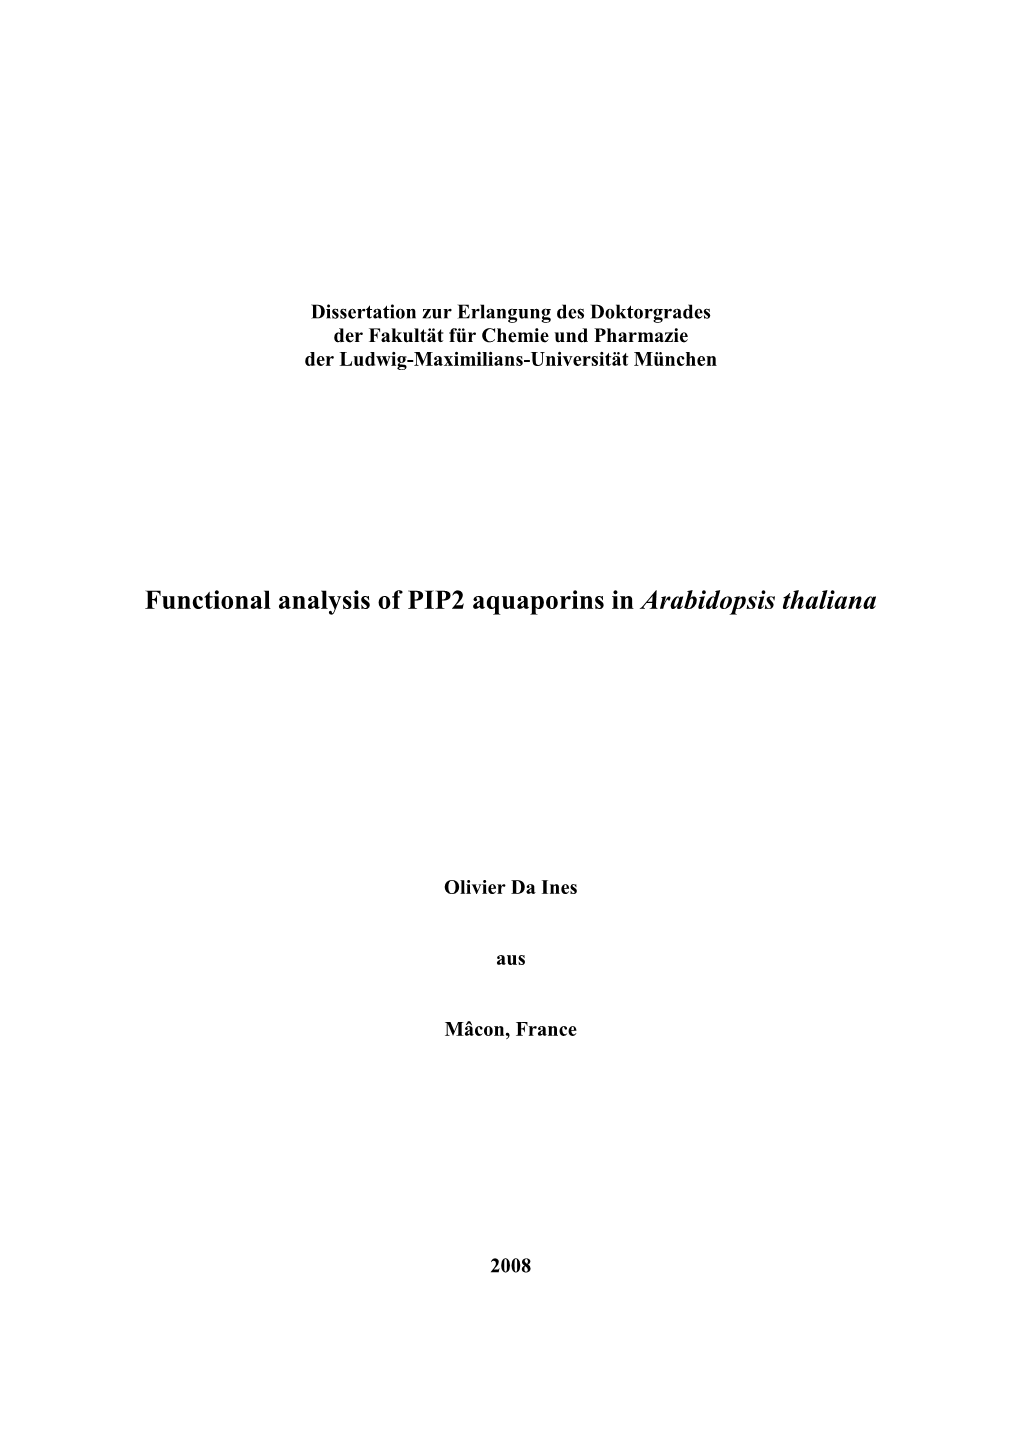 Functional Analysis of PIP2 Aquaporins in Arabidopsis Thaliana